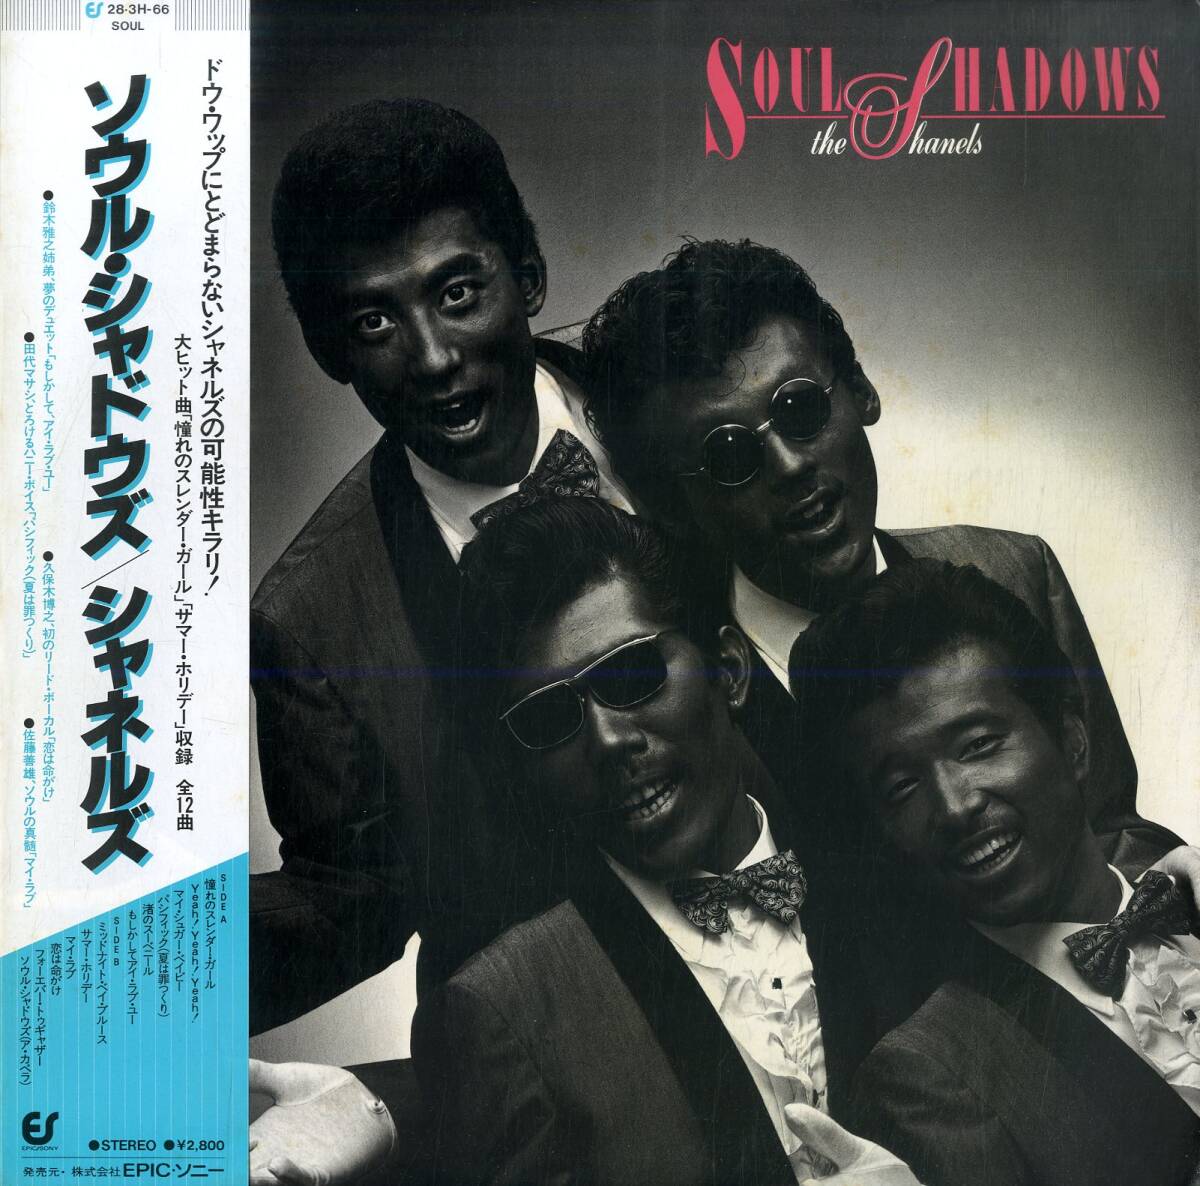 A00568975/LP/Chanels (Rats &amp; Star, Masayuki Suzuki) "Soul Shadows (1982, 28-3H-66, Soul, Soul, Funk, Funk, R &amp; B, Douwa